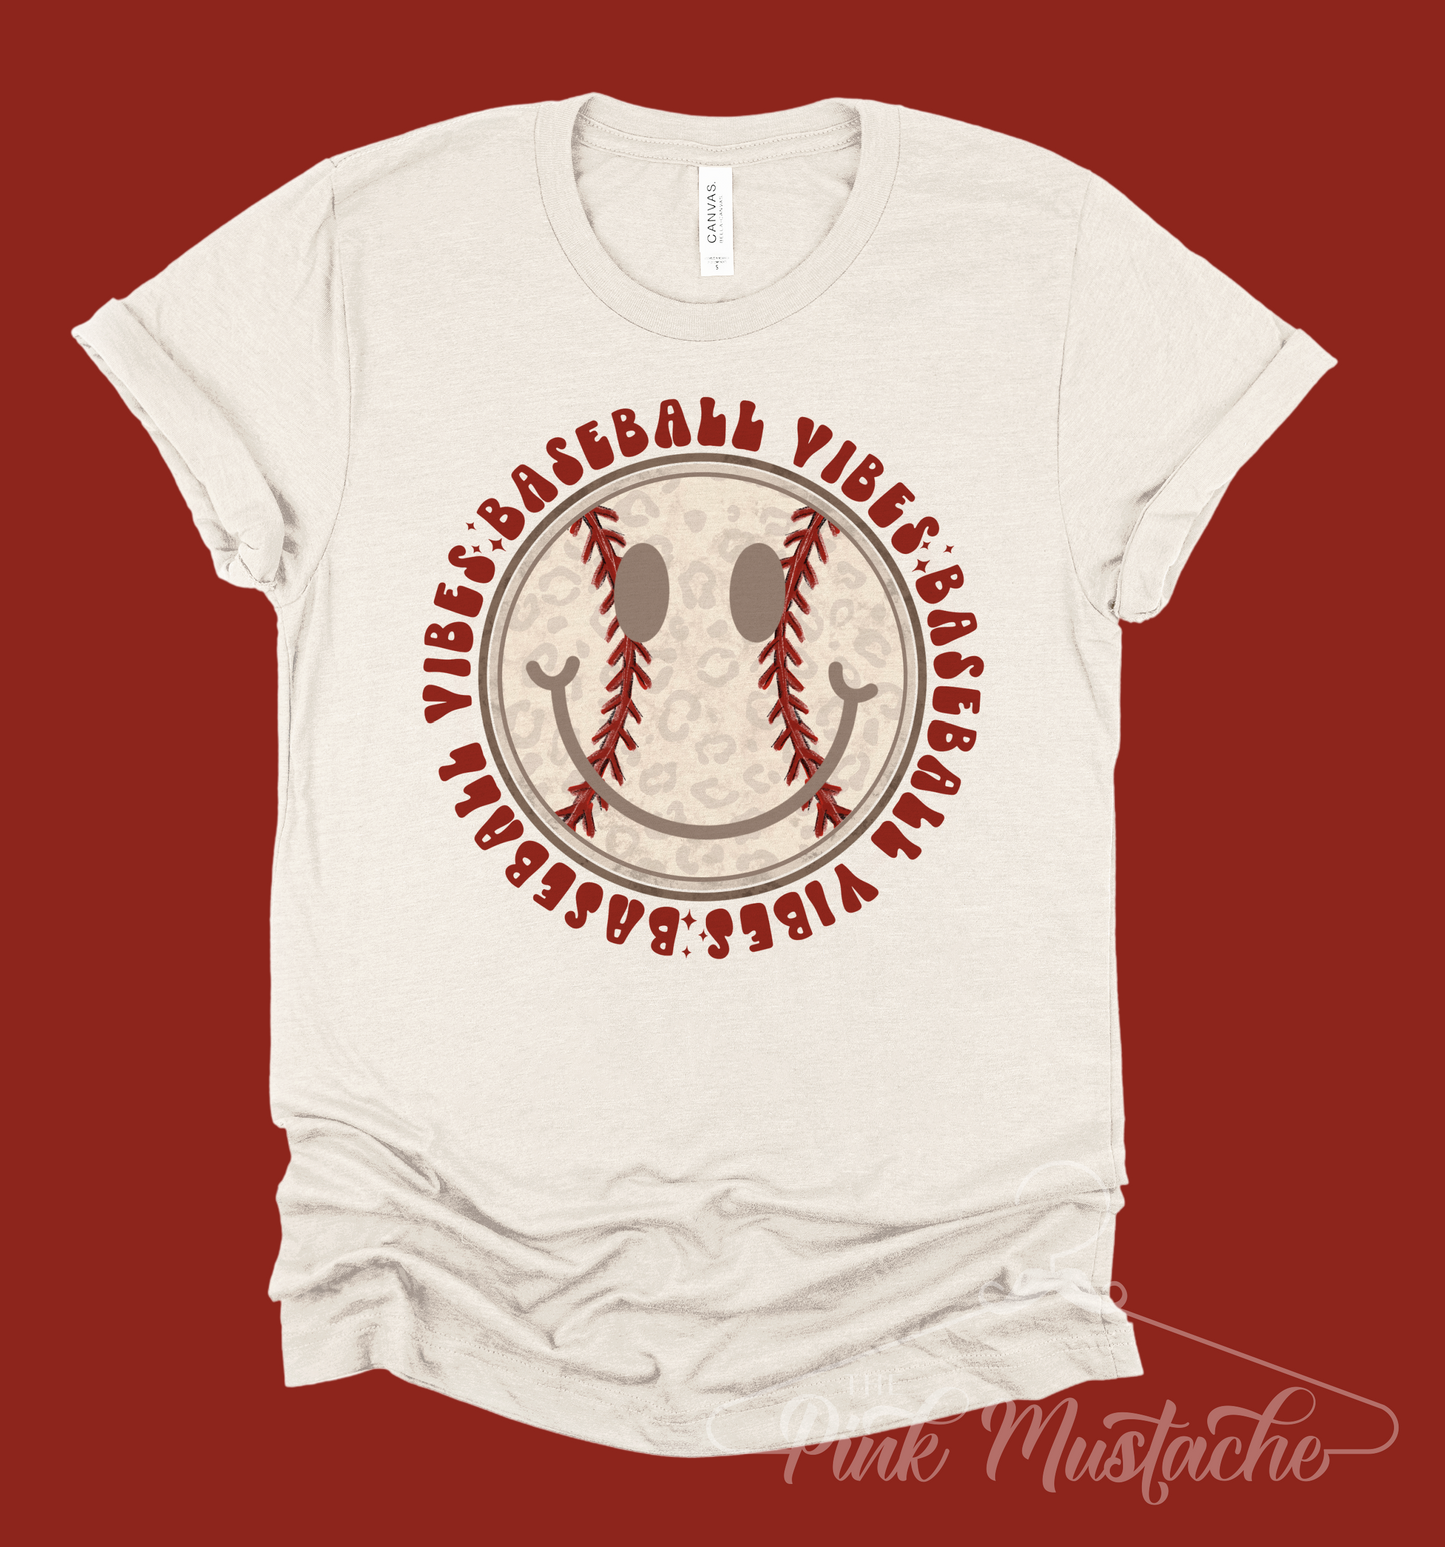 Baseball Vibes Smiley Retro Soft Style Tee -Unisex Toddler, Youth, and Adult Sized Baseball Shirt/ Softball Shirt/ Baseball Mom Tee